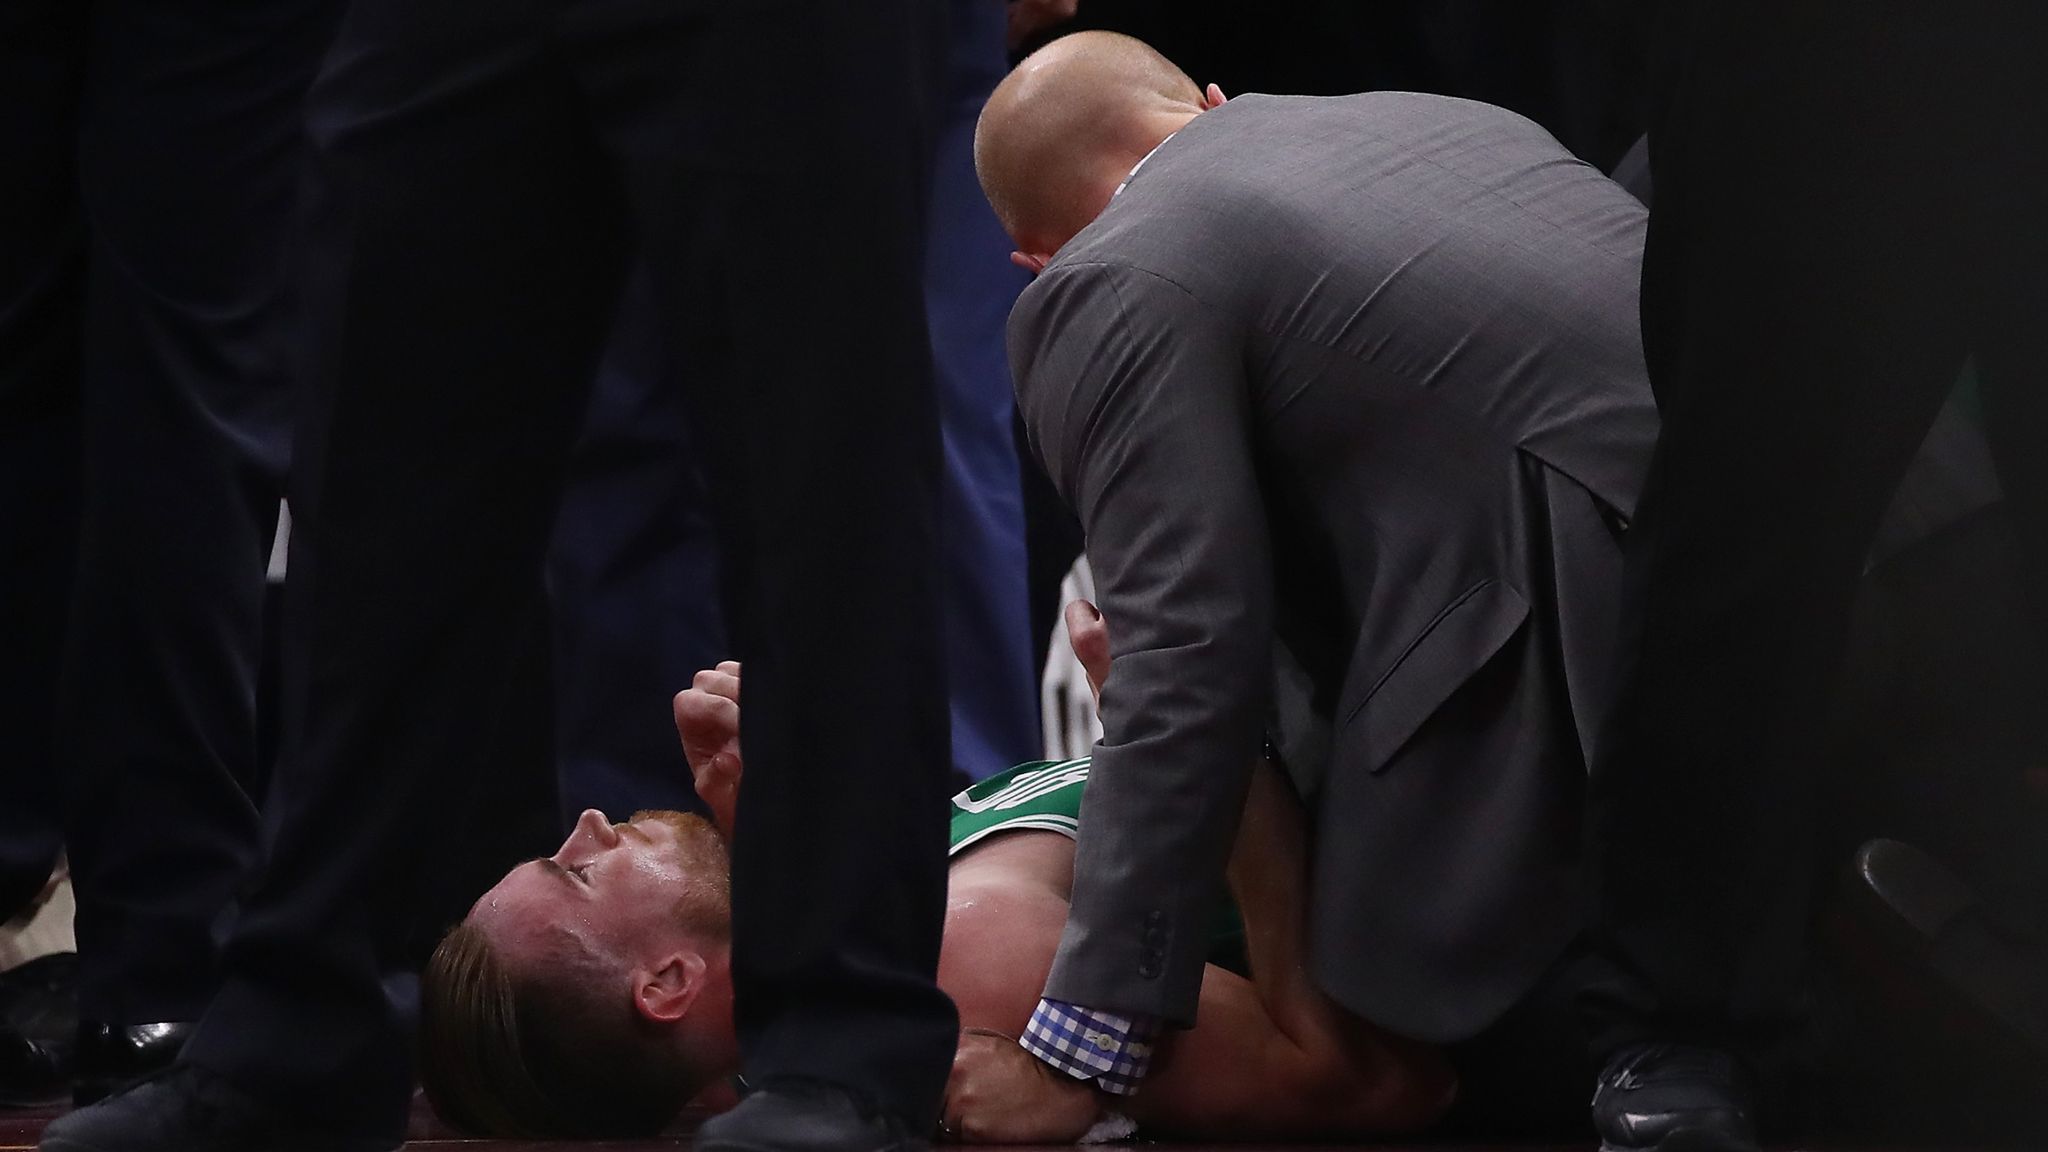 Celtics' Gordon Hayward suffers horrific ankle injury in season opener 